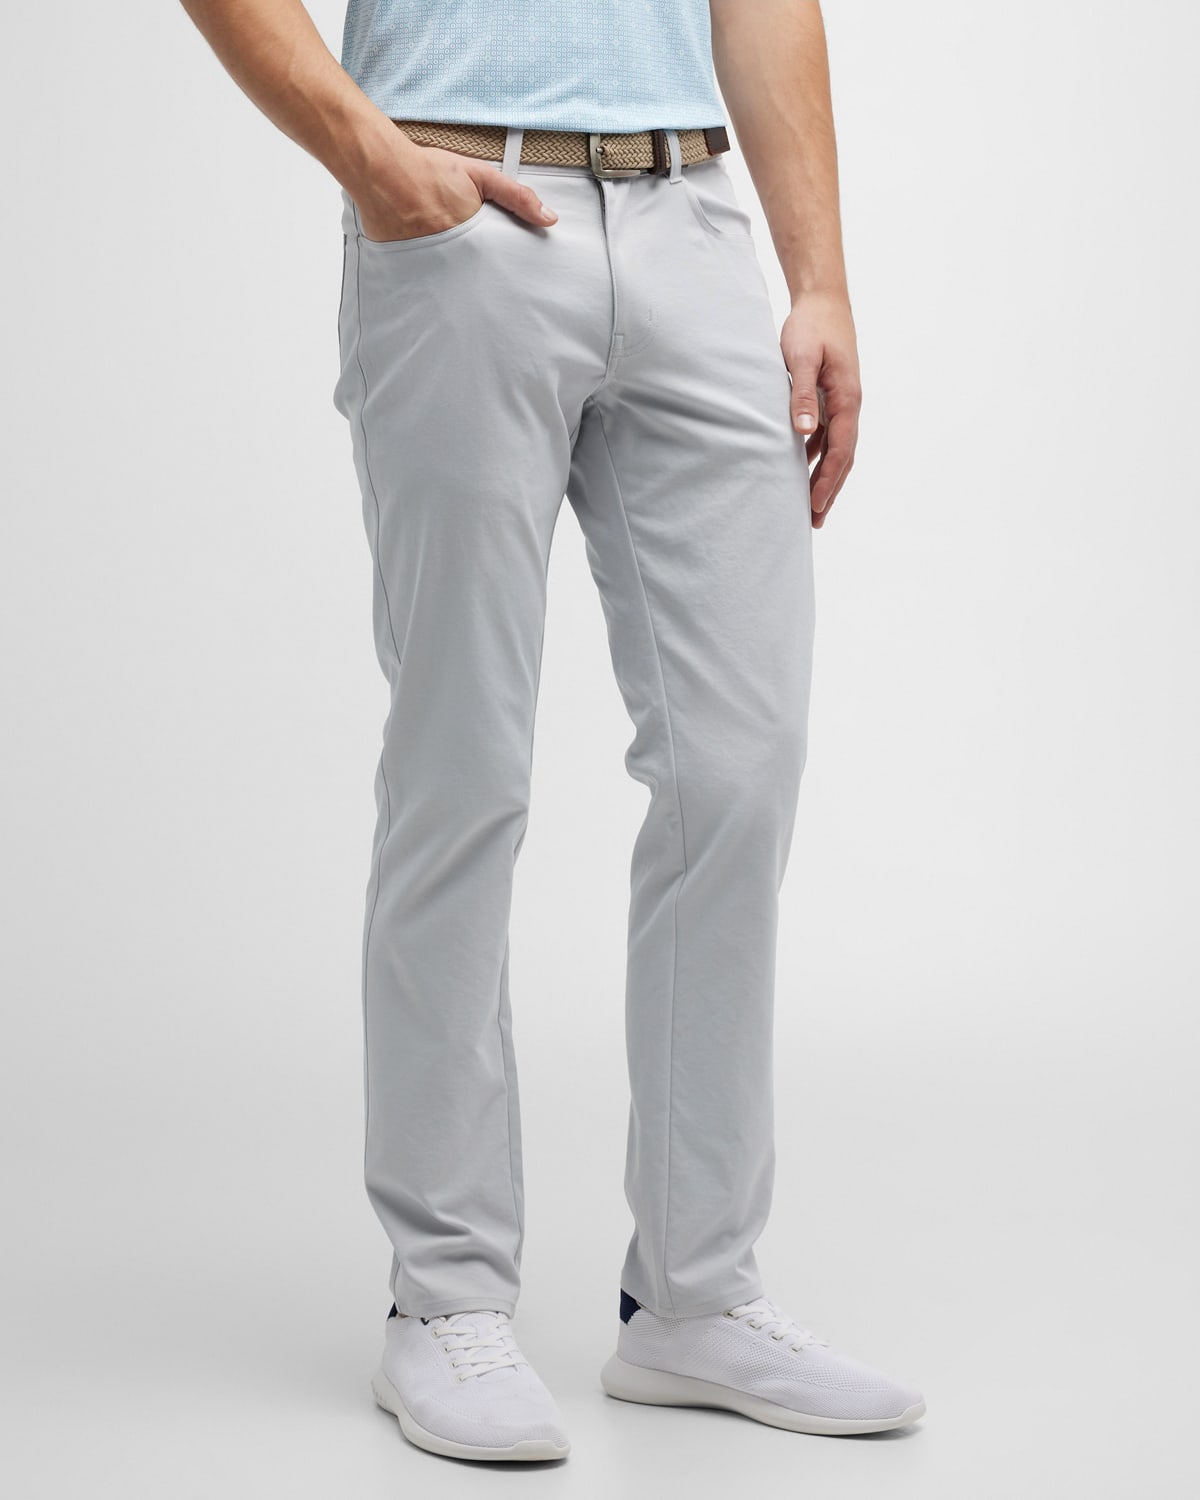 Men's EB66 5-Pocket Performance Pants